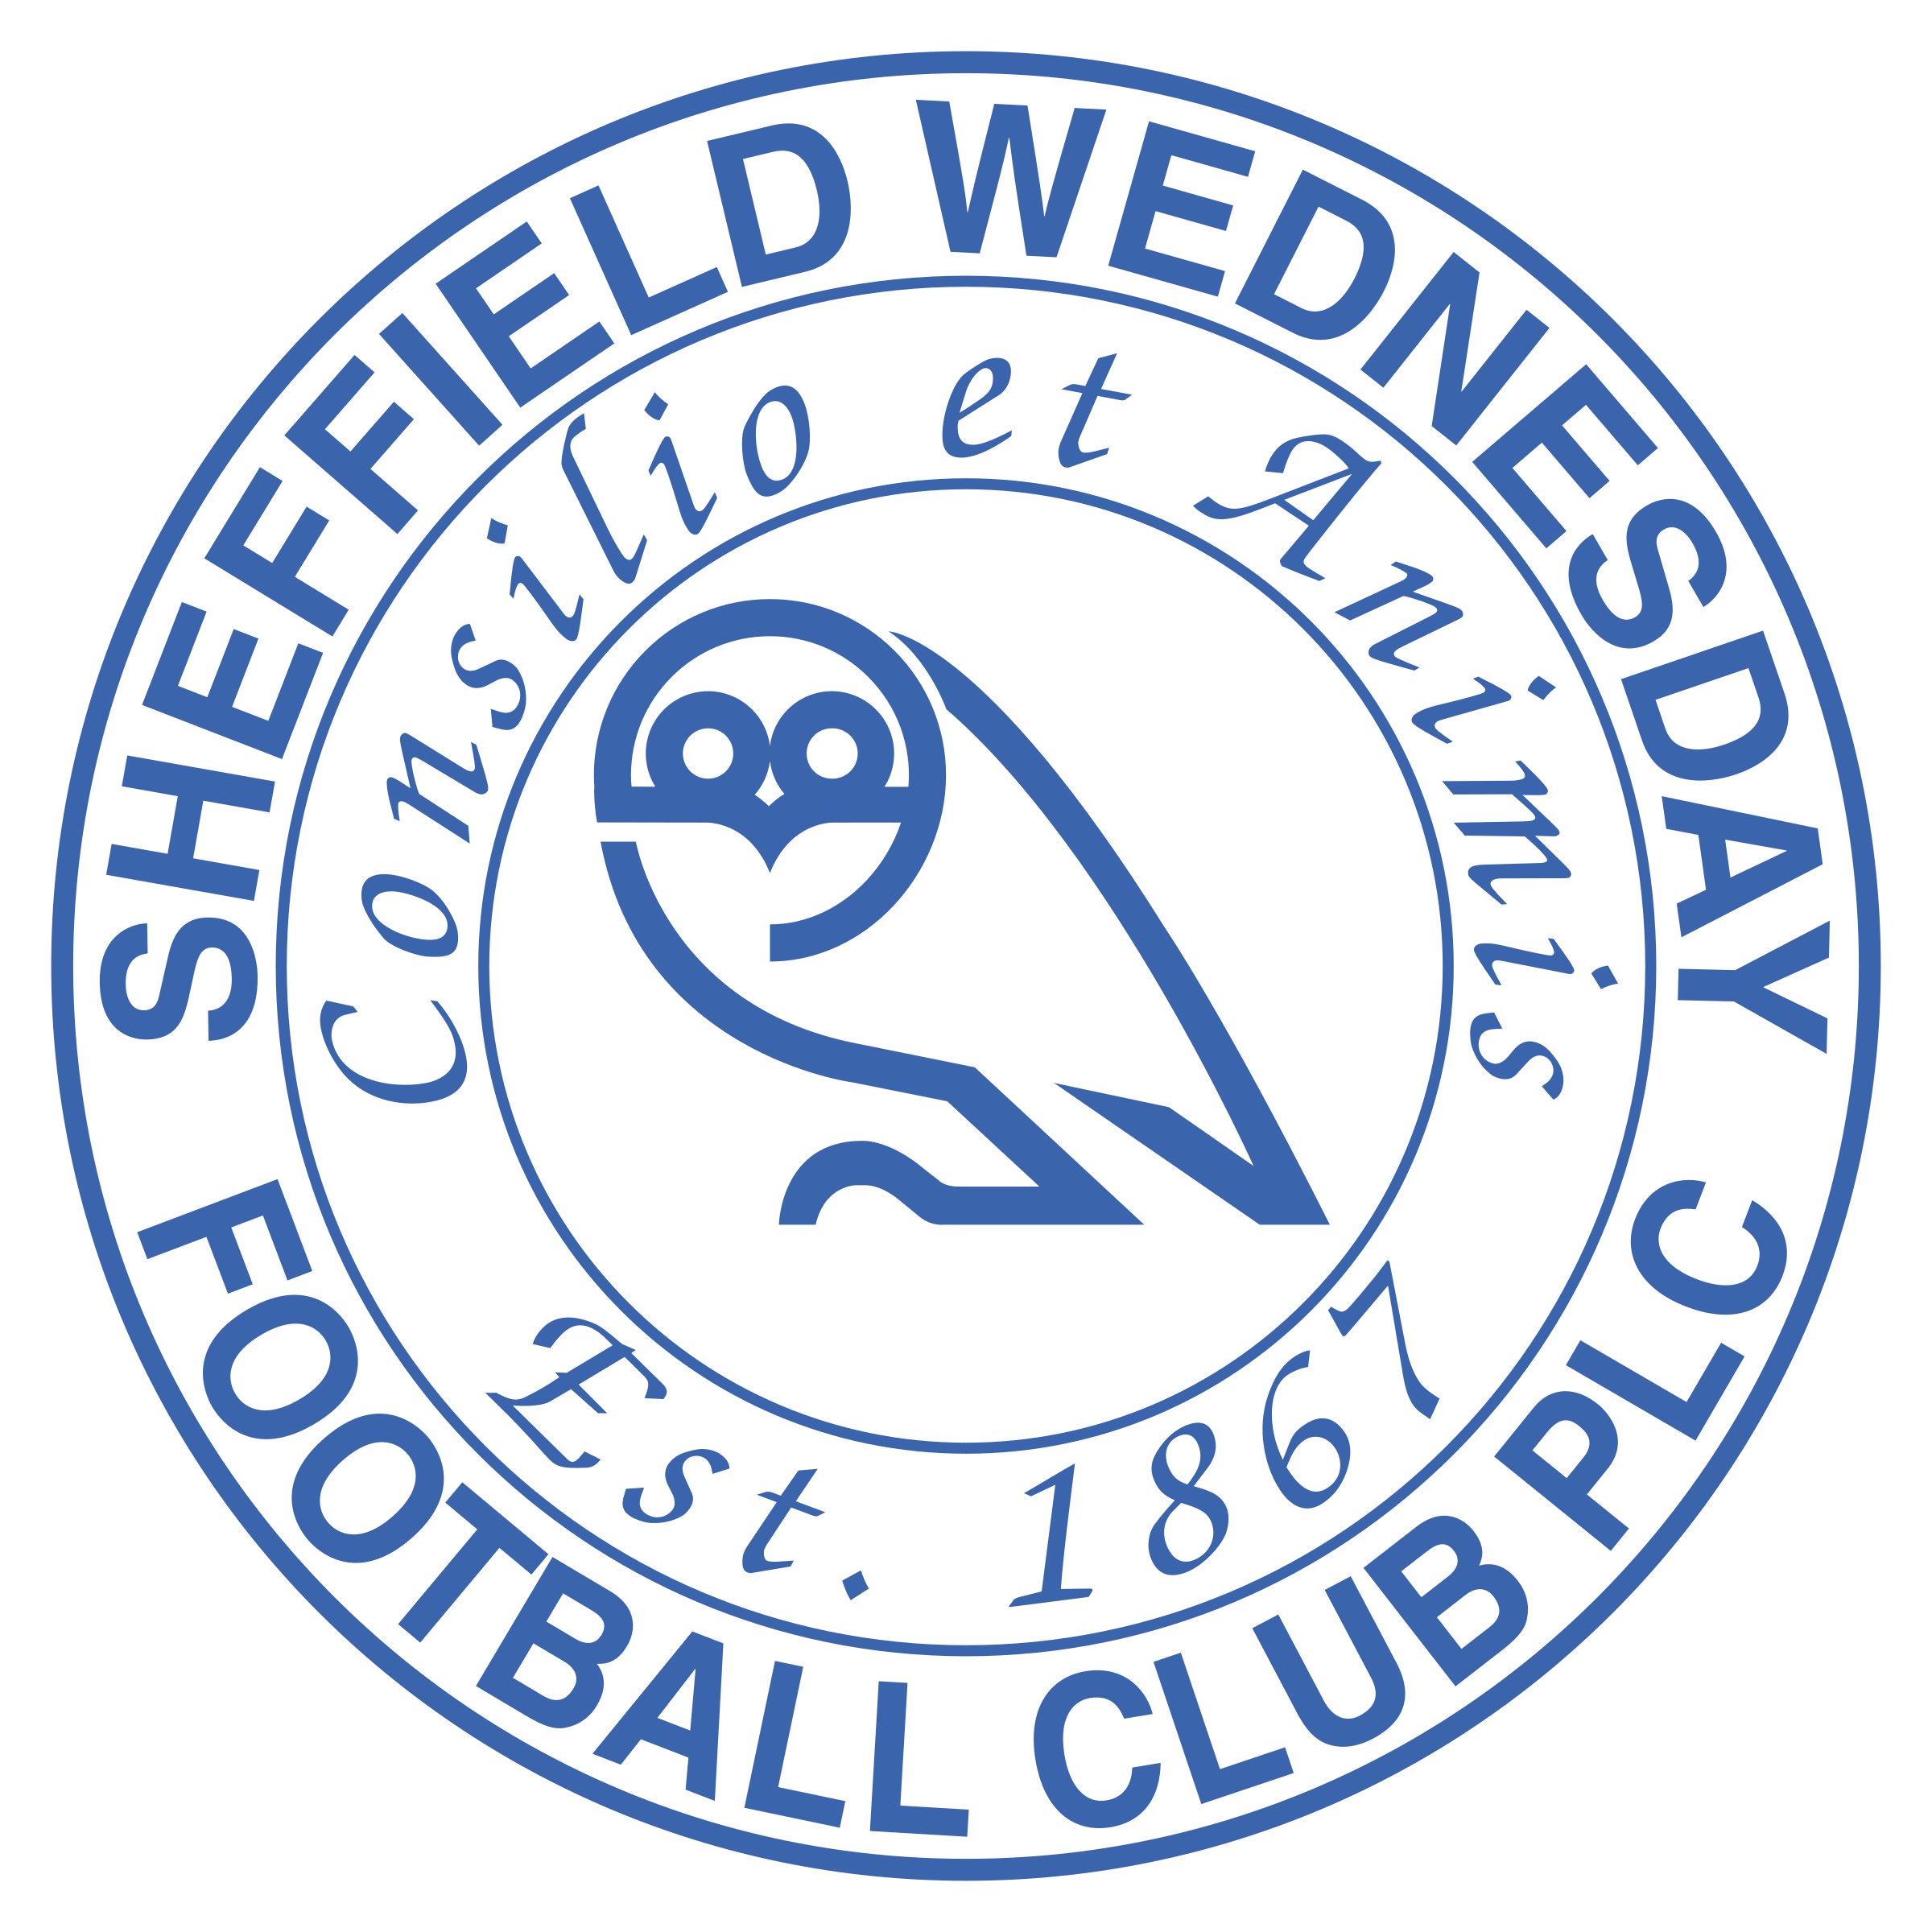 Sheffield Logo - Sheffield Wednesday FC Logo PNG Transparent & SVG Vector - Freebie ...